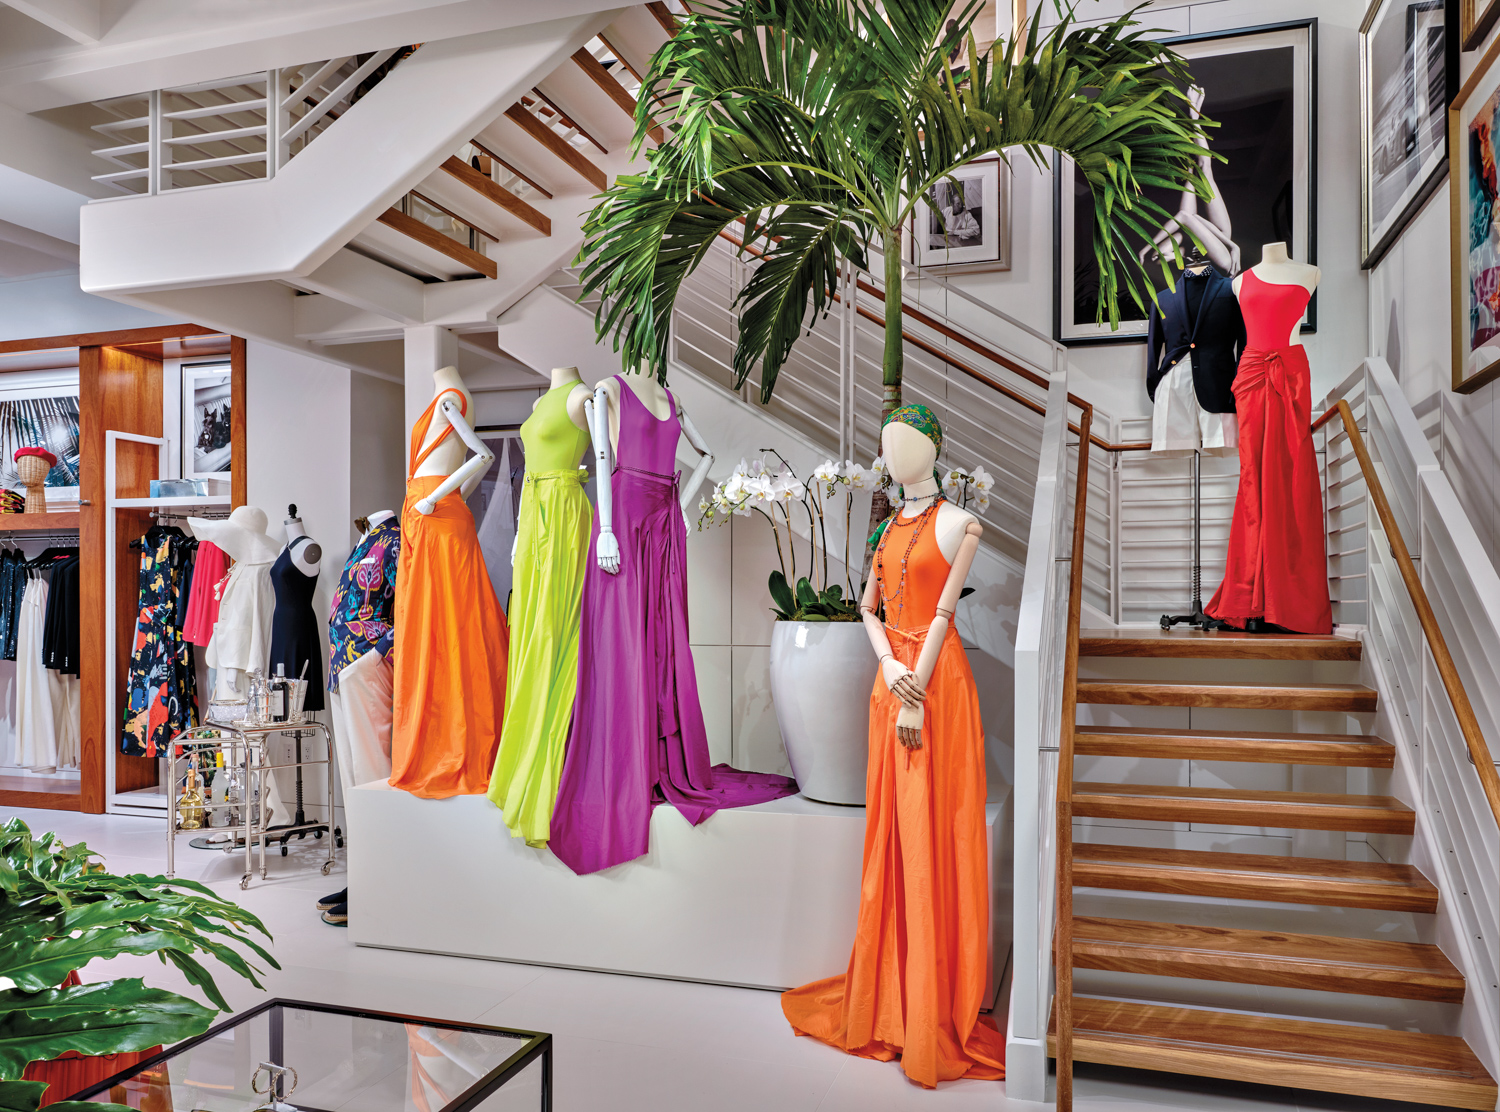 Mannequins wear vibrant dresses along staircase of warm teak wood planks and crisp-white tile flooring.